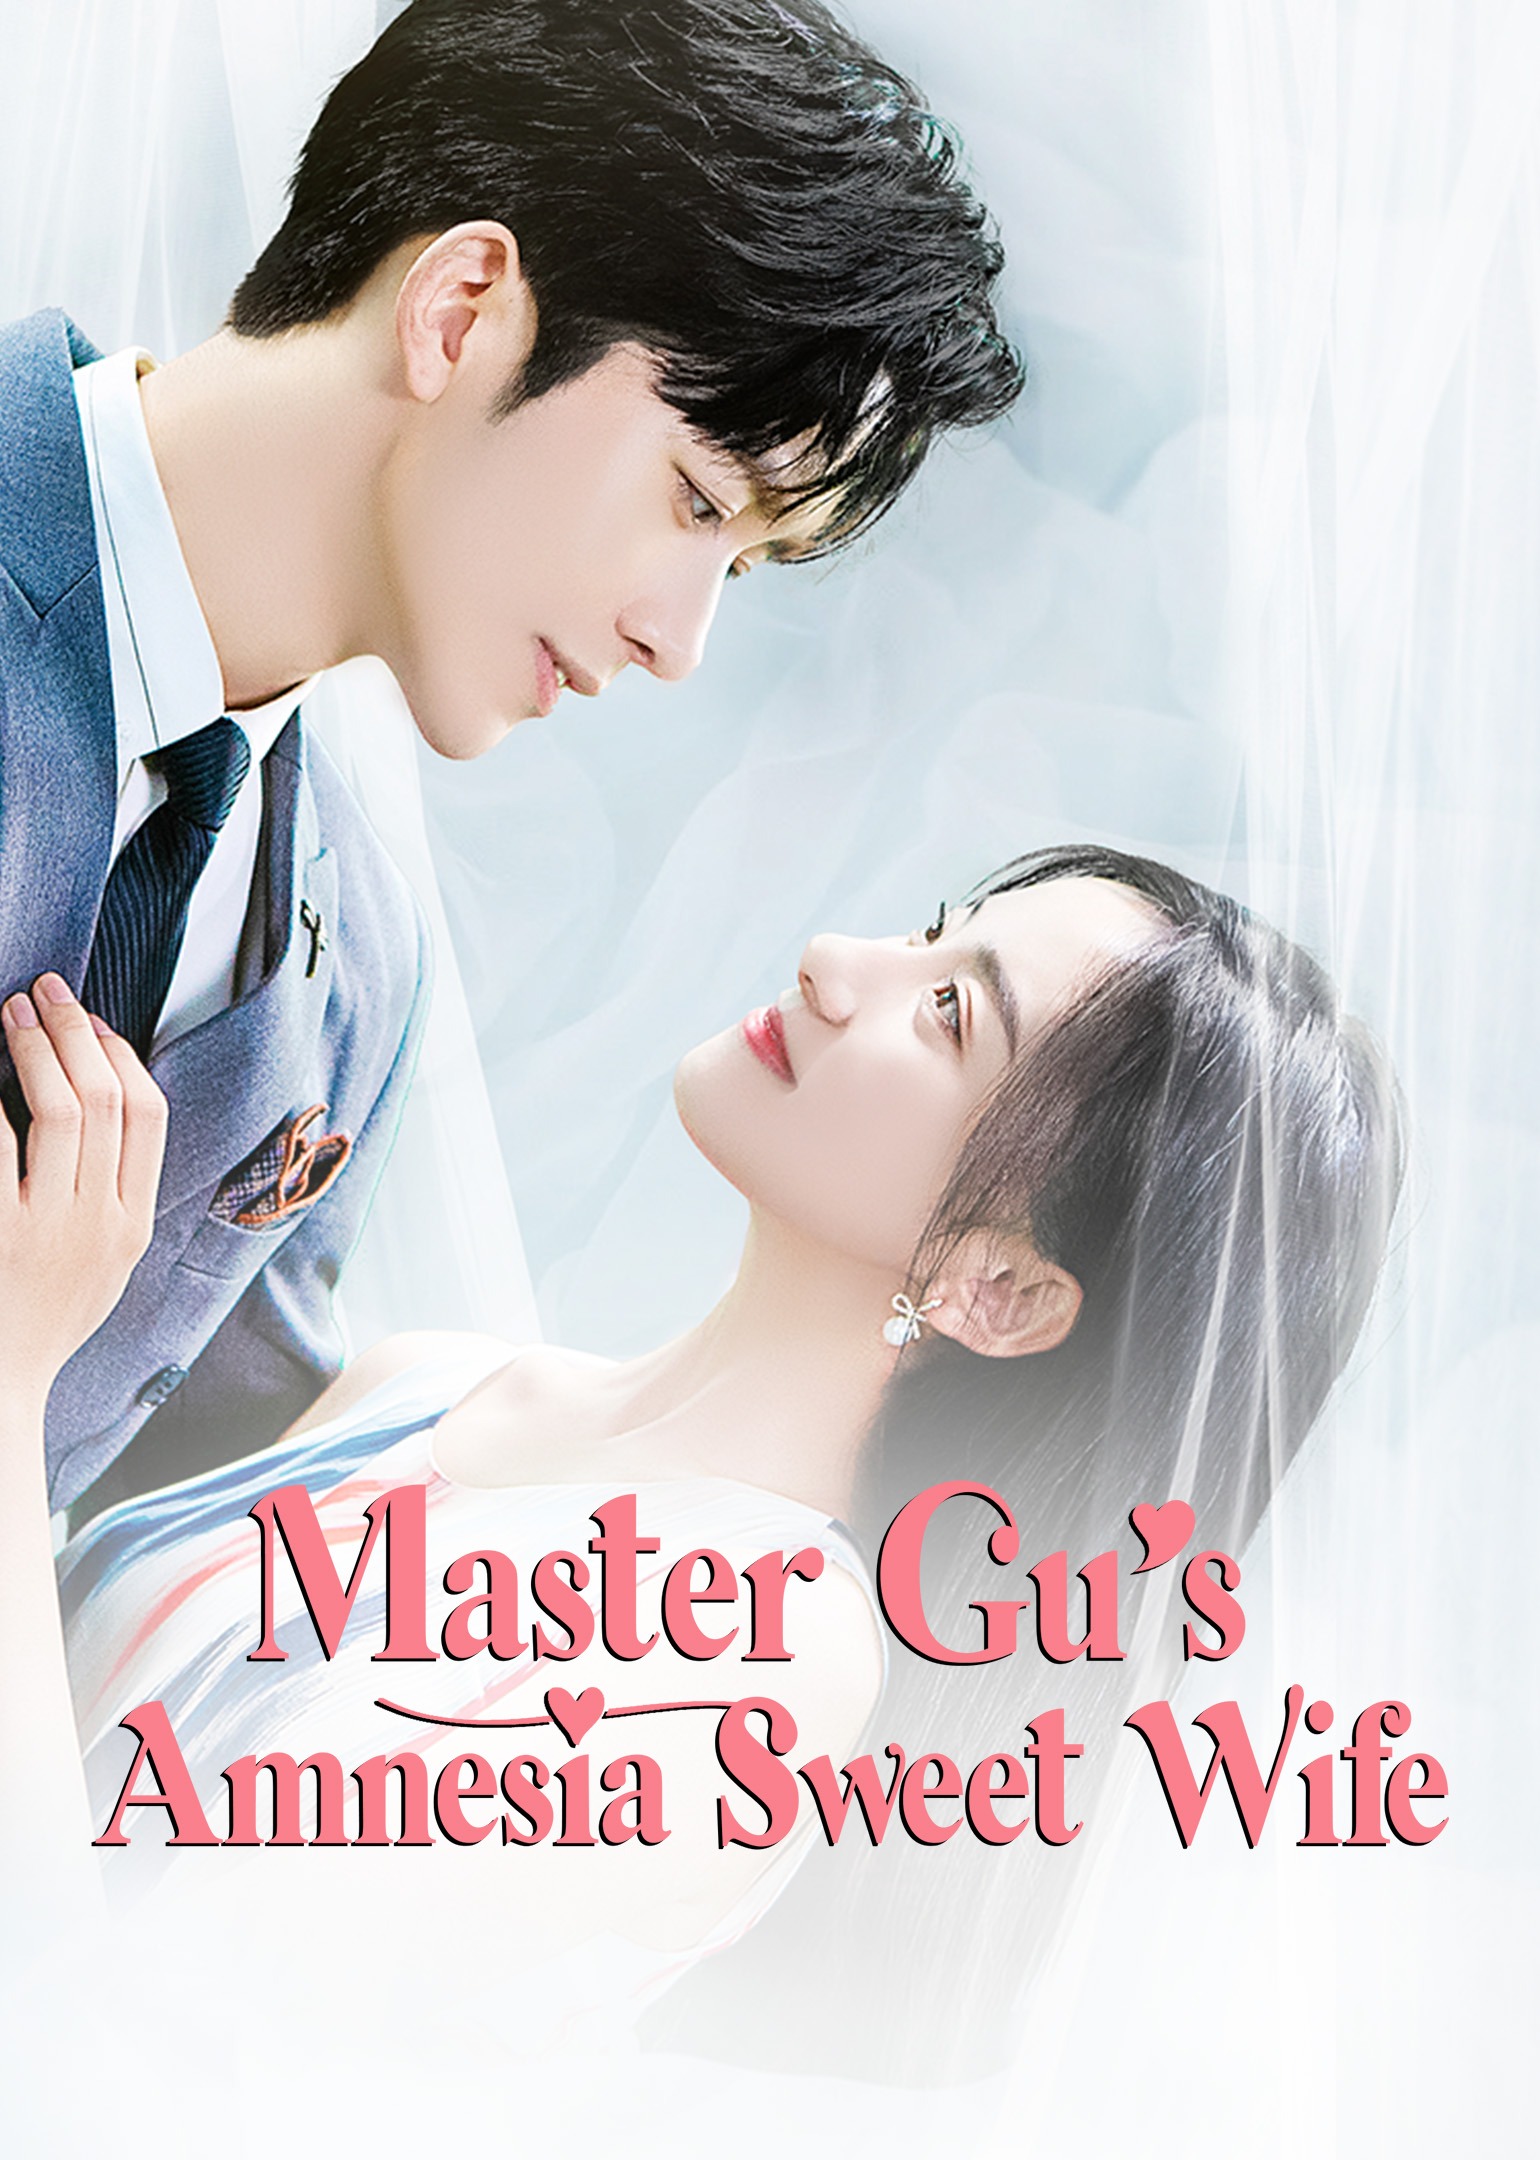 Master Gus Amnesia Sweet Wife - Watch HD Video Online photo